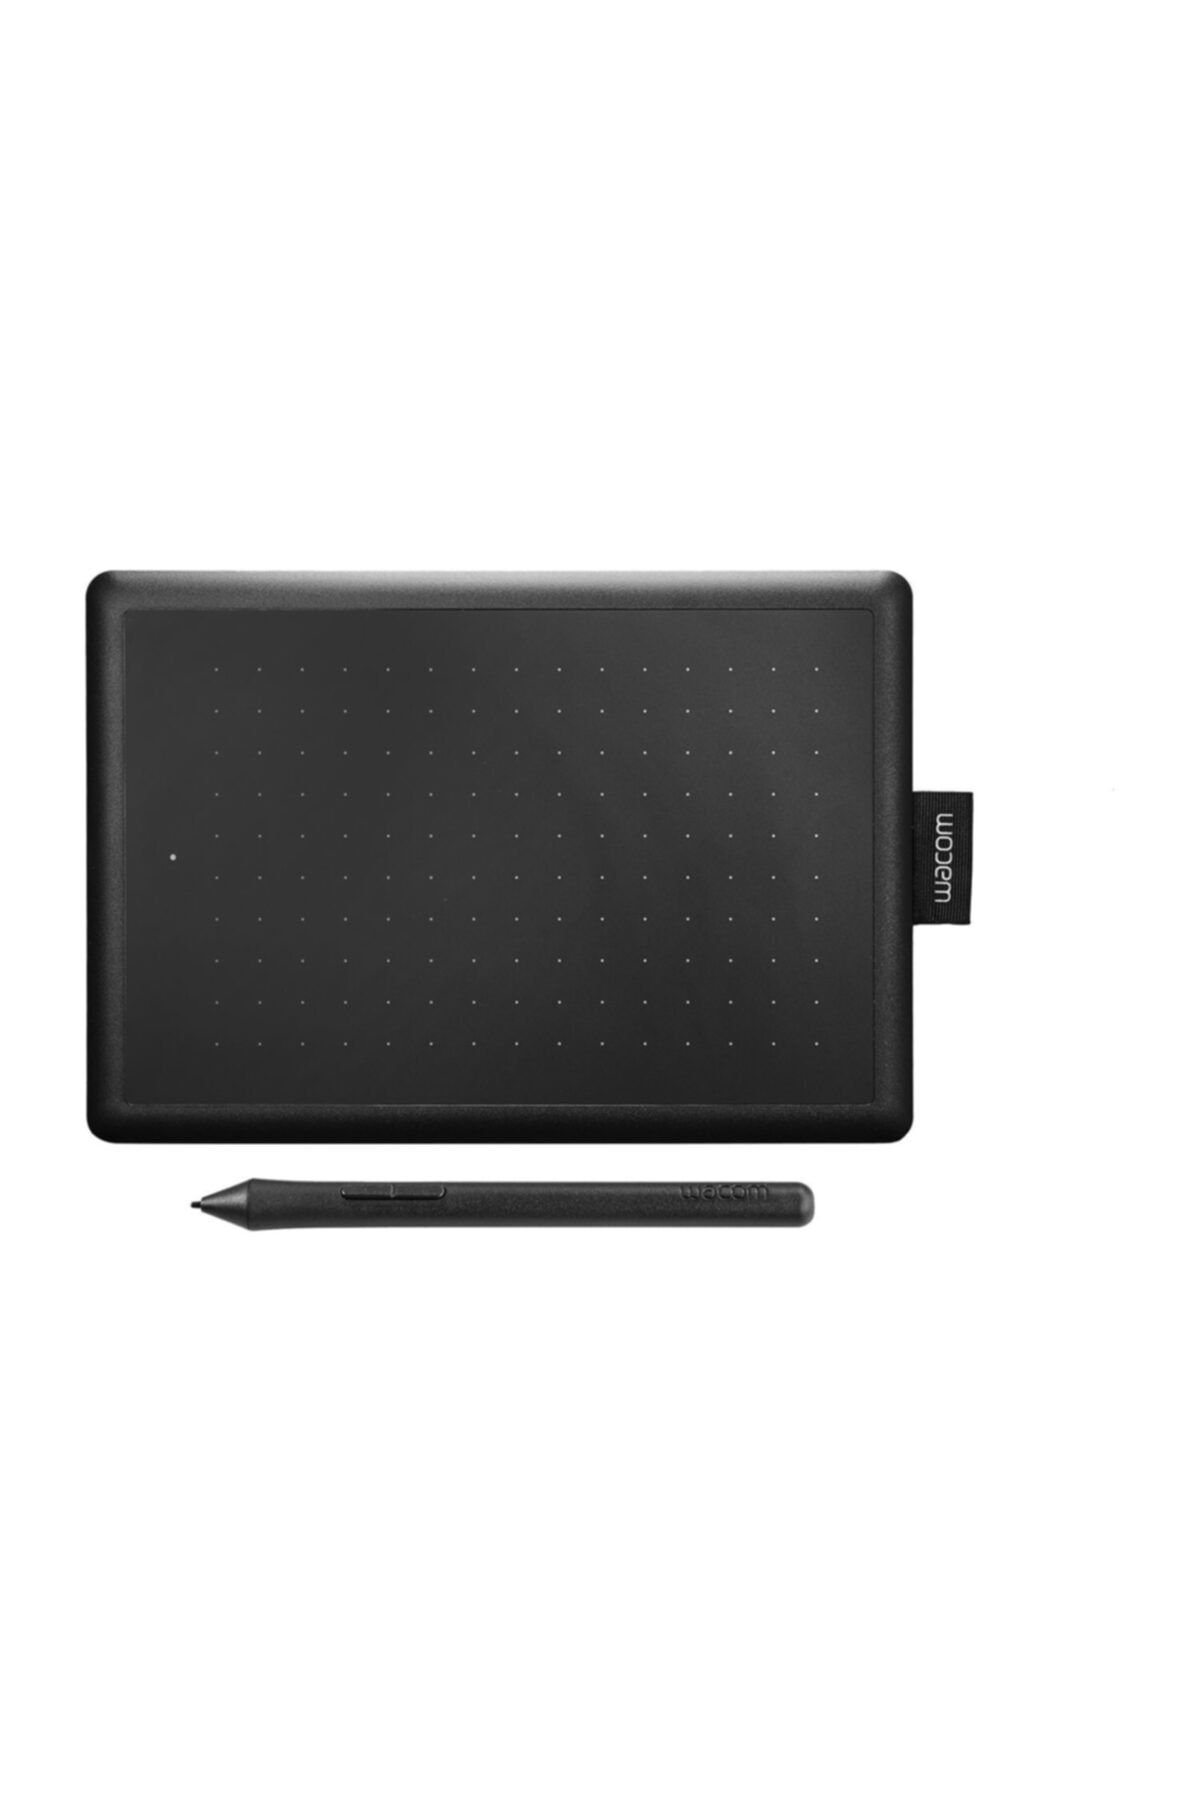 Wacom One By Small Yüksek Hassasiyetli Grafik Tablet Ctl-472 8.3 X 5.7 İnç